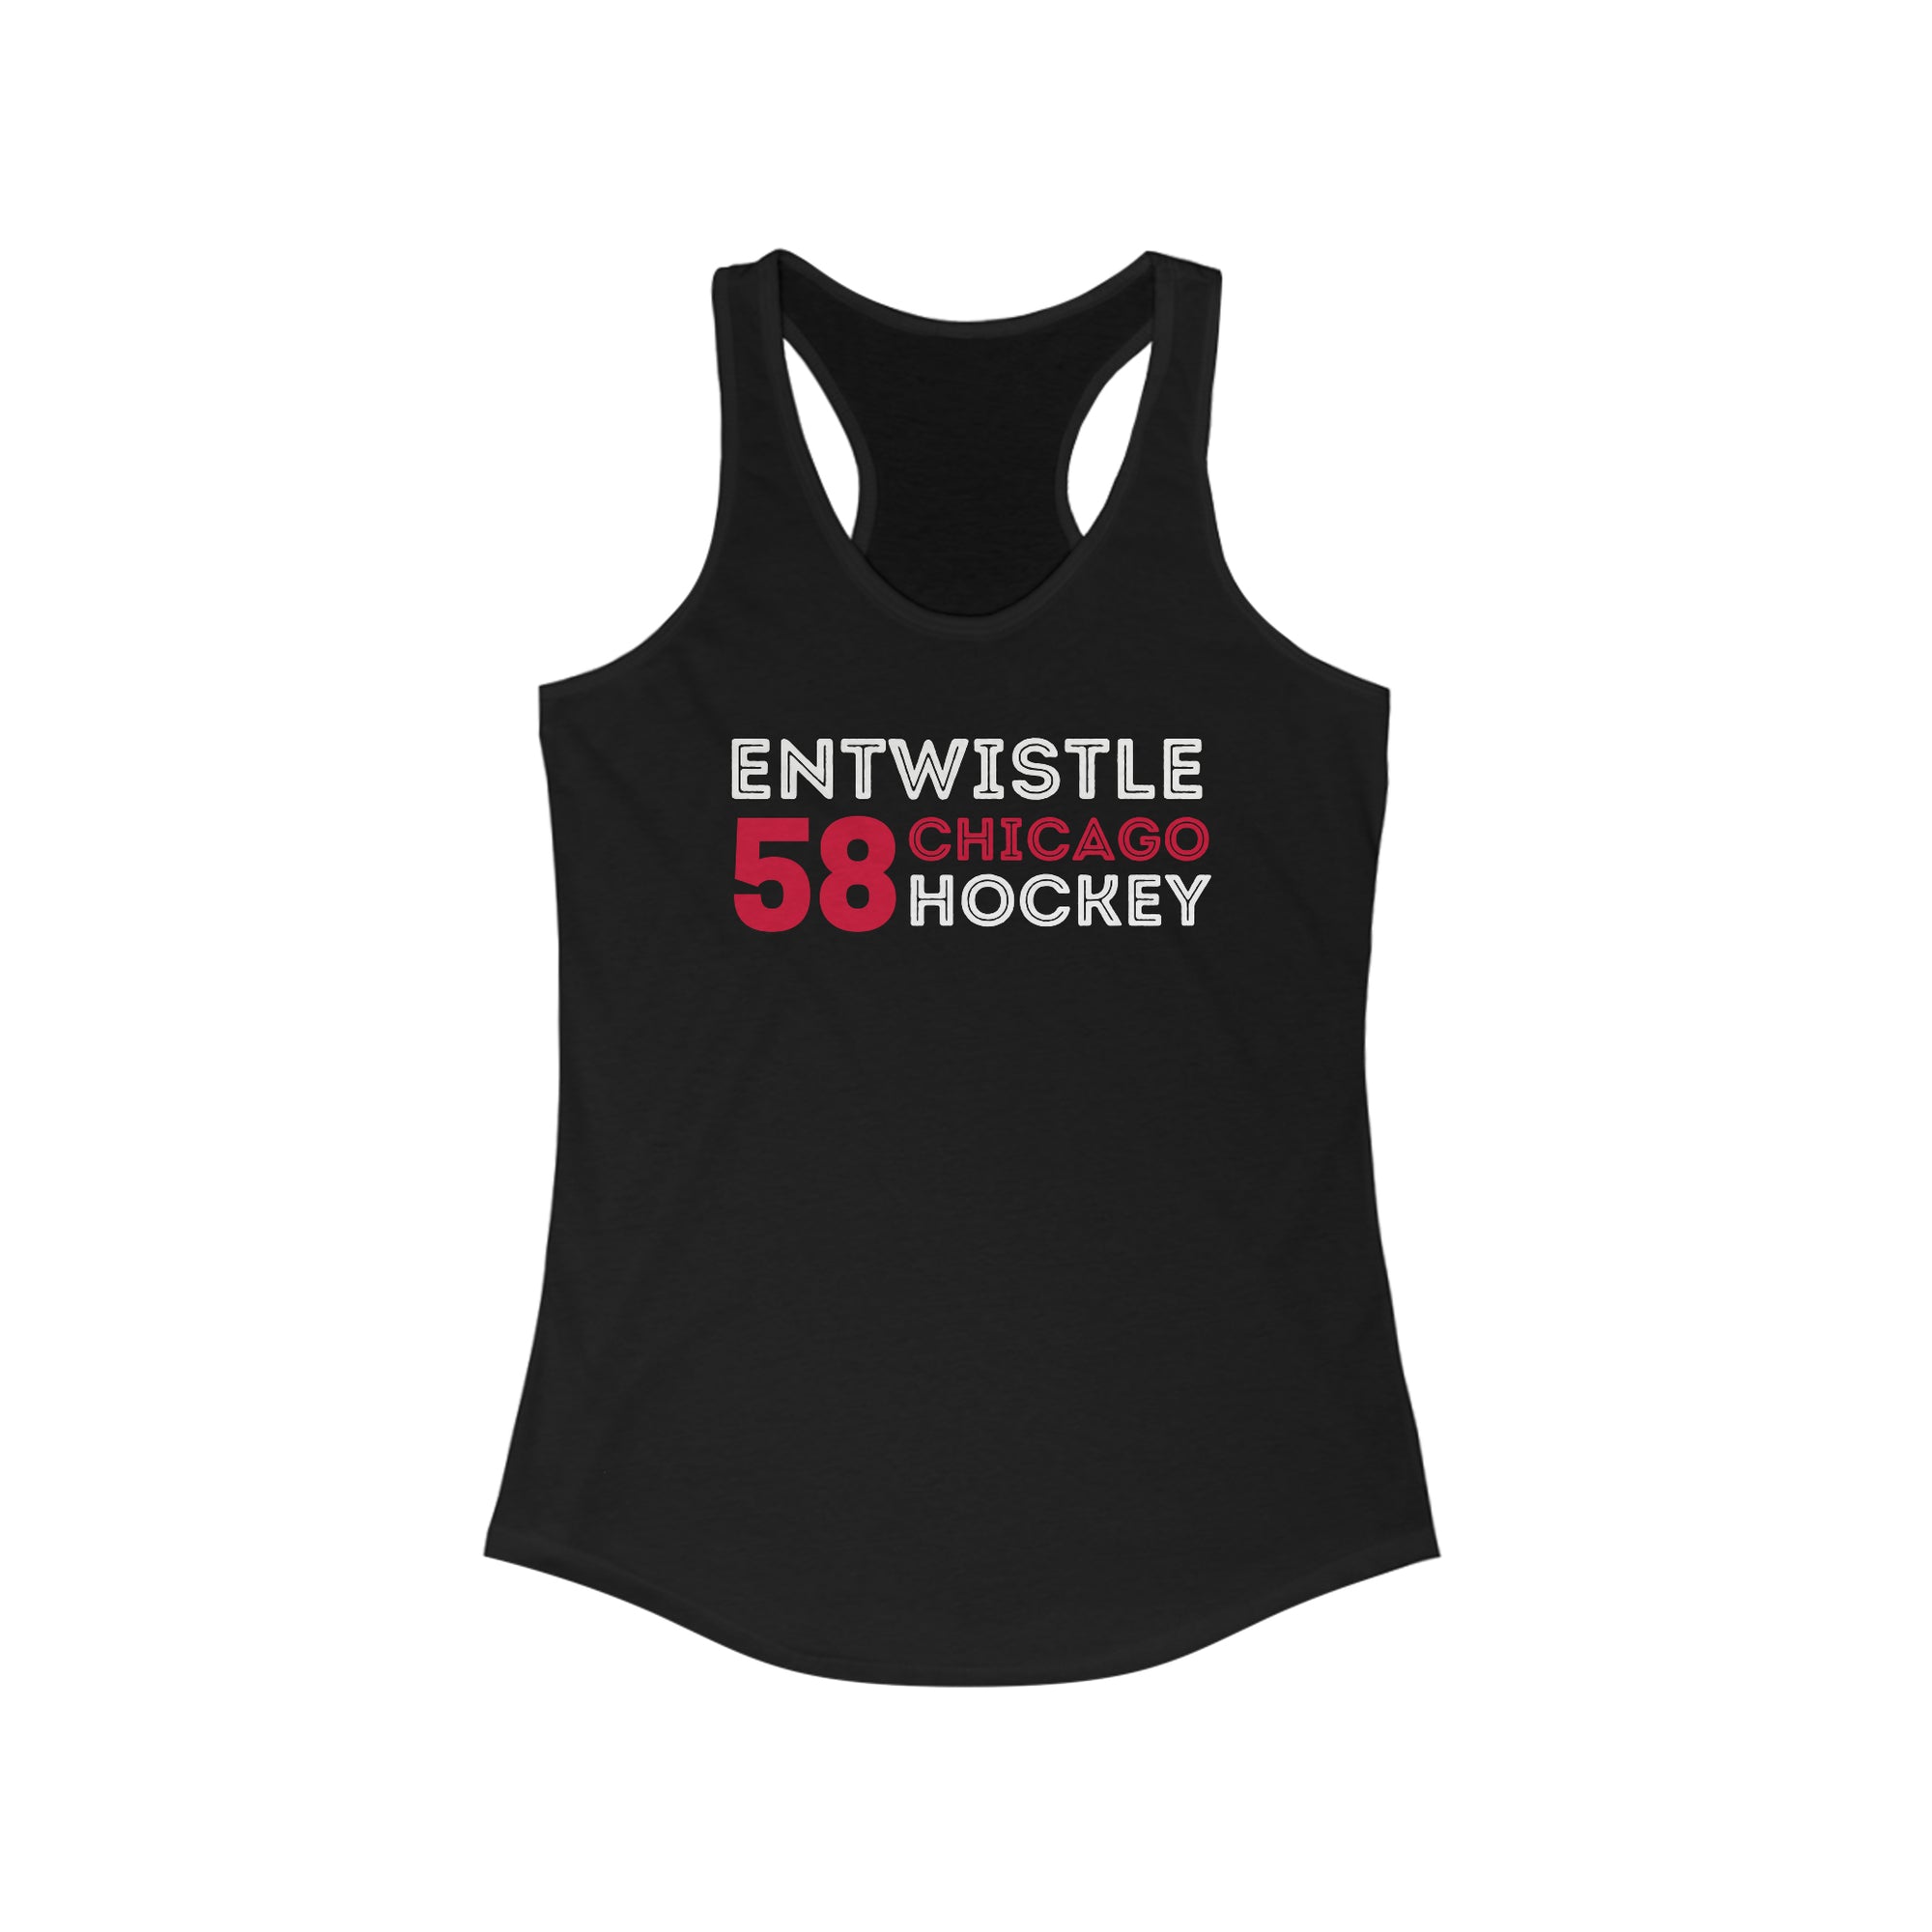 Entwistle 58 Chicago Hockey Grafitti Wall Design Women's Ideal Racerback Tank Top